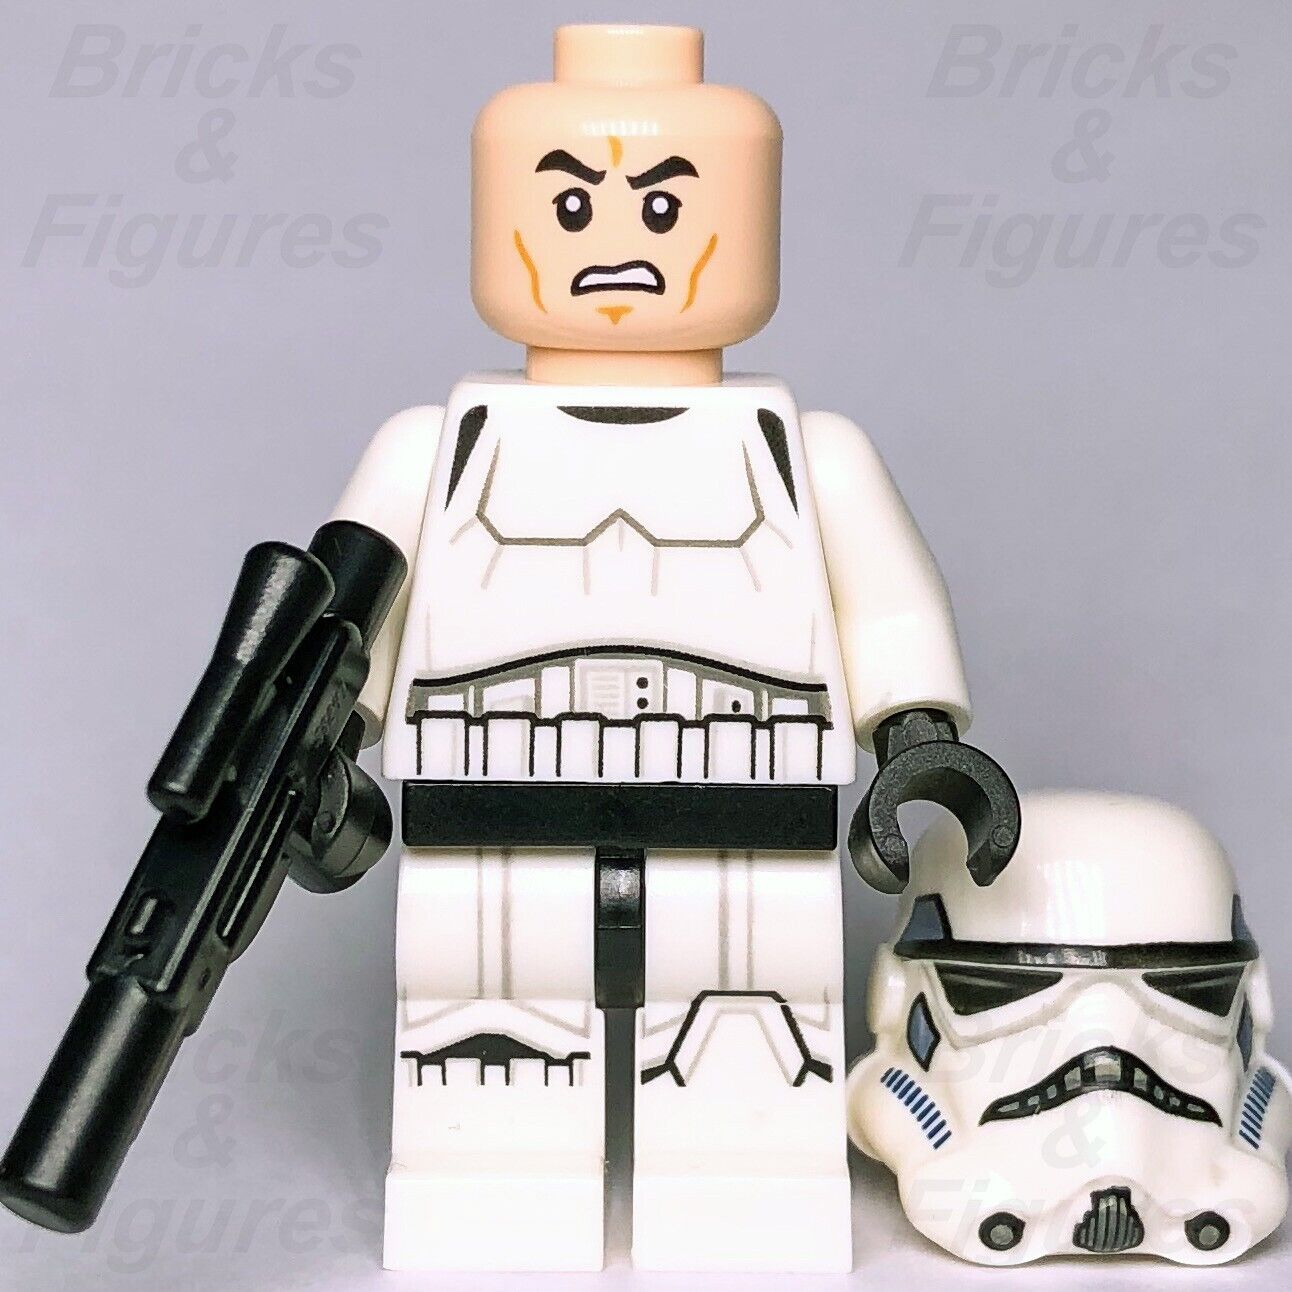 LEGO Star Wars Imperial Stormtrooper Minifigure 75159 75055 75165 75222 sw0585